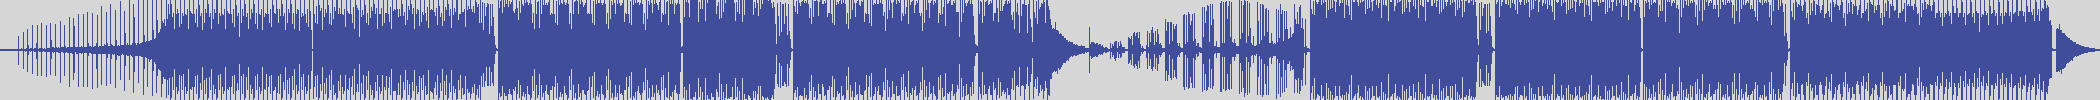 nf_boyz_records [NFY075] Saponio - Monarch [Original Mix] audio wave form